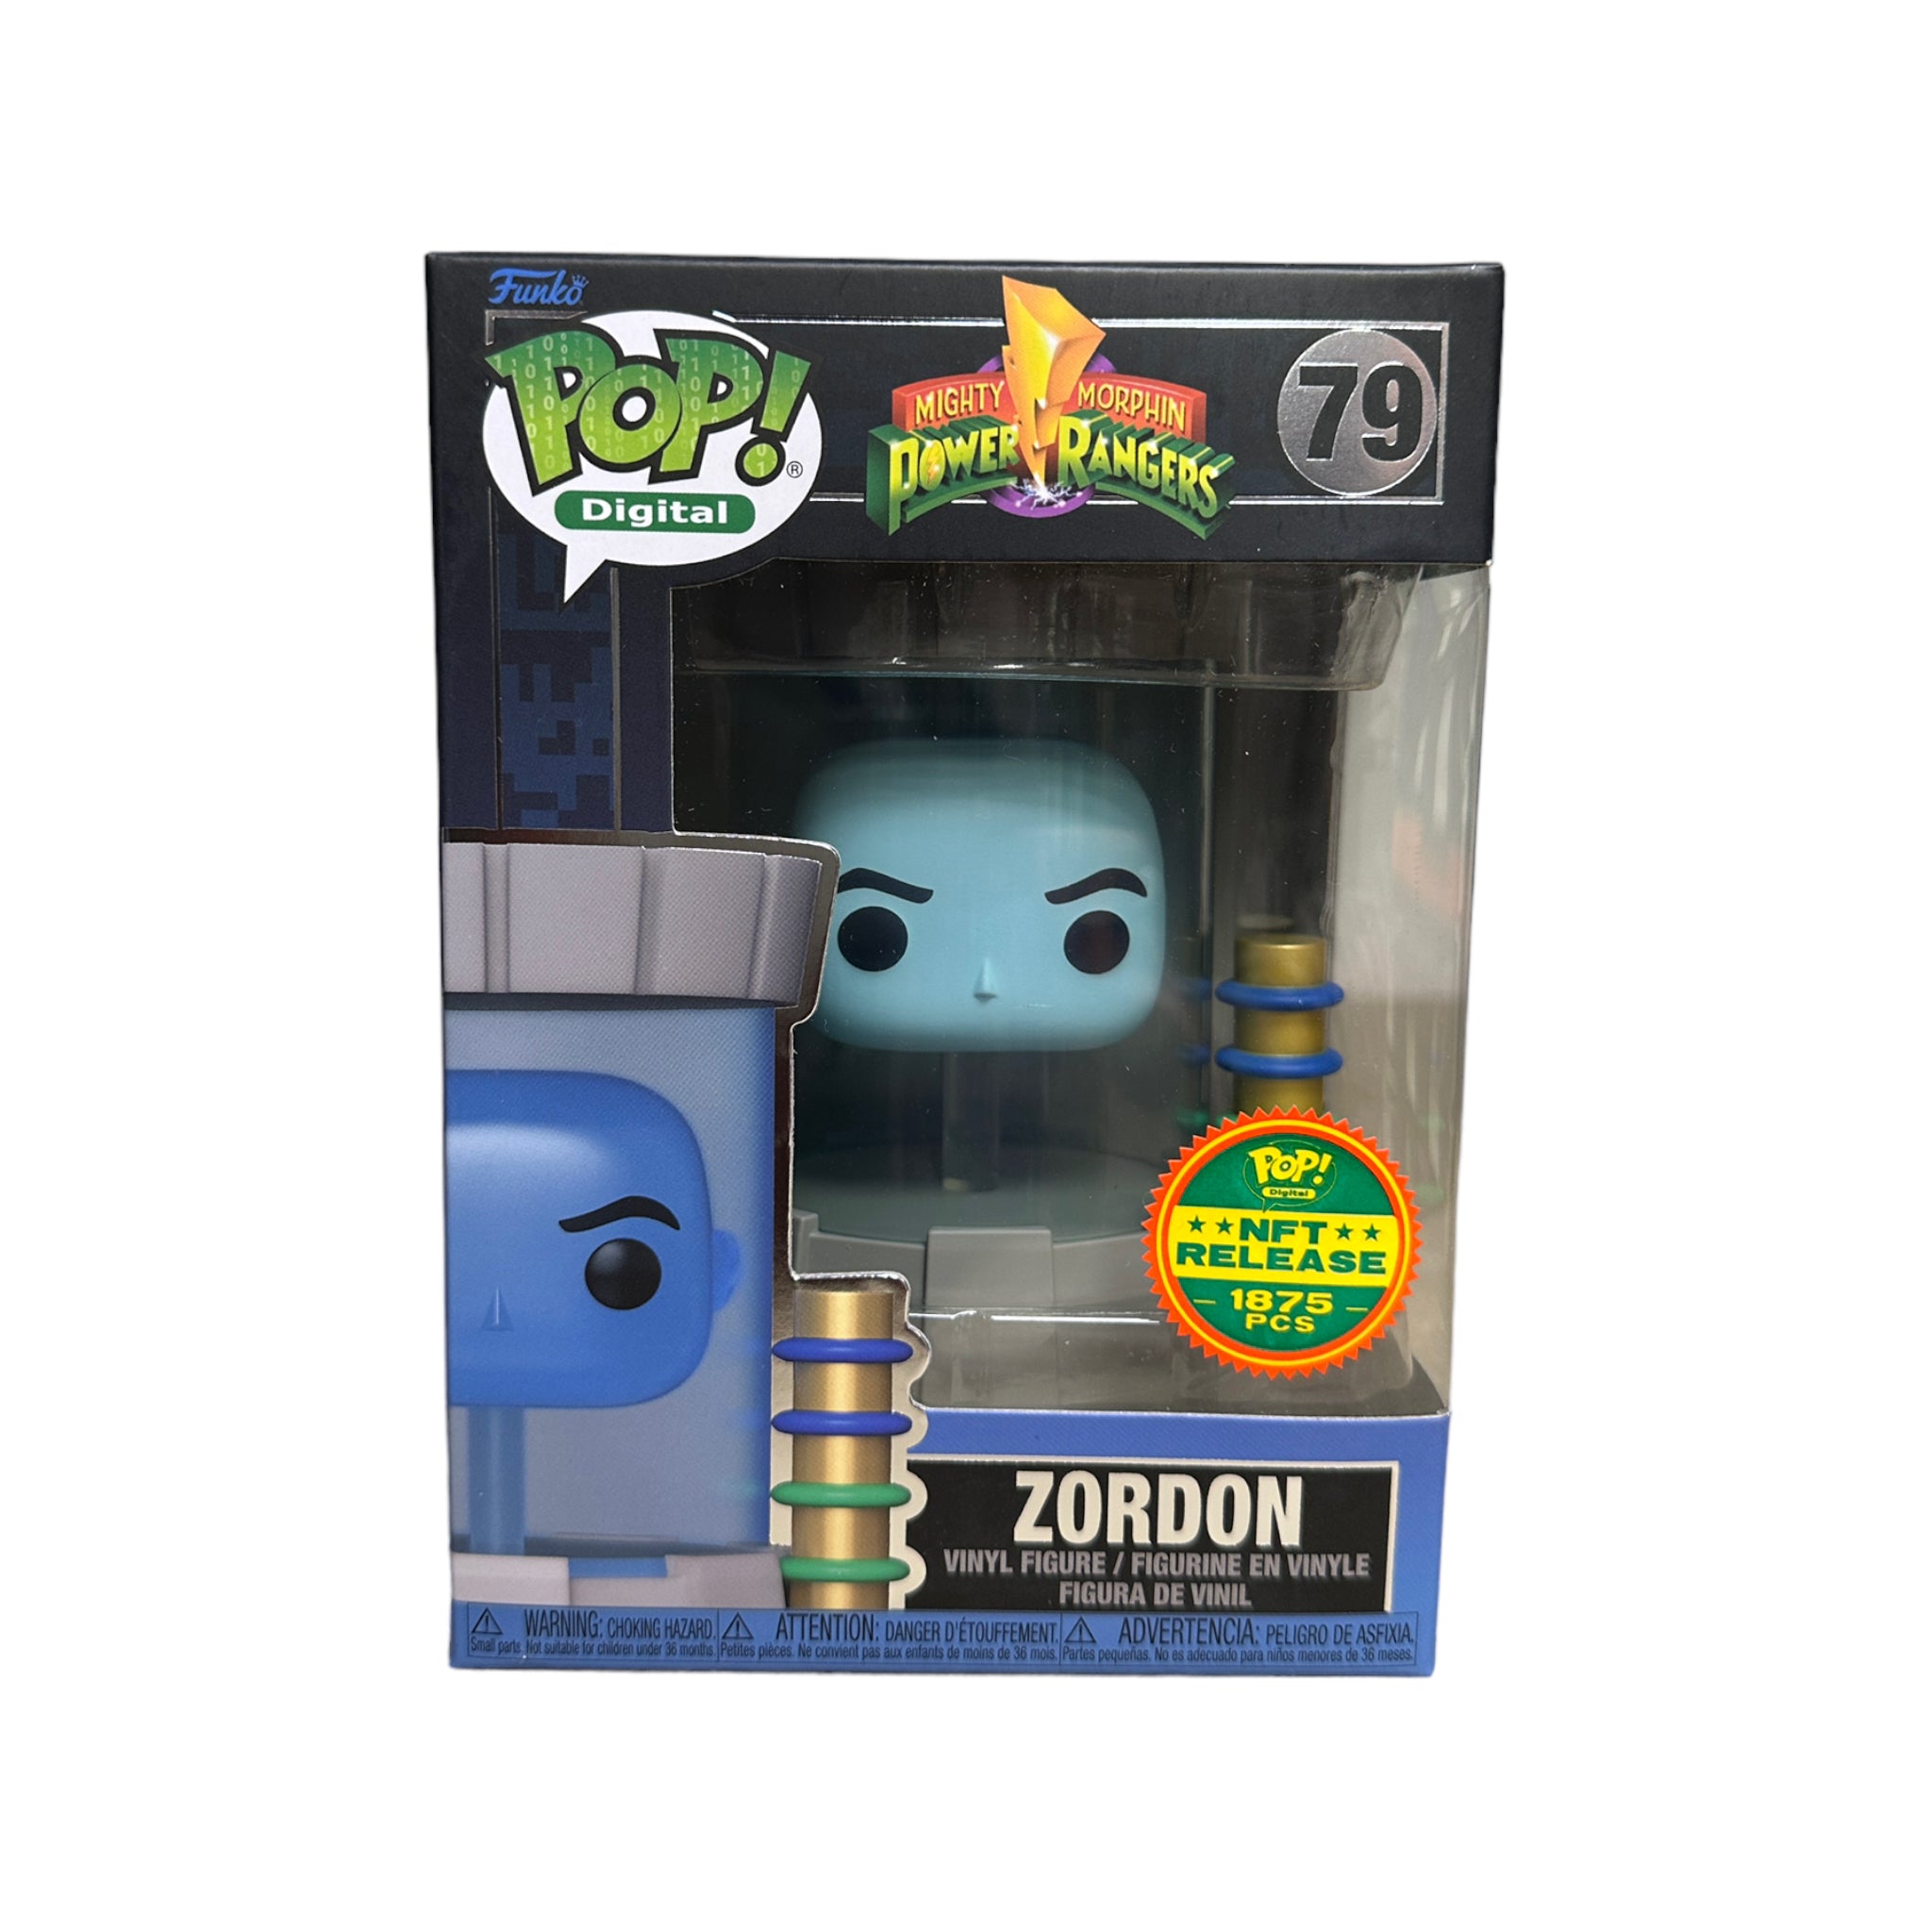 Zordon #79 Funko Pop! - Mighty Morphin Power Rangers - NFT Release Exclusive LE1875 Pcs - Condition 9.5/10